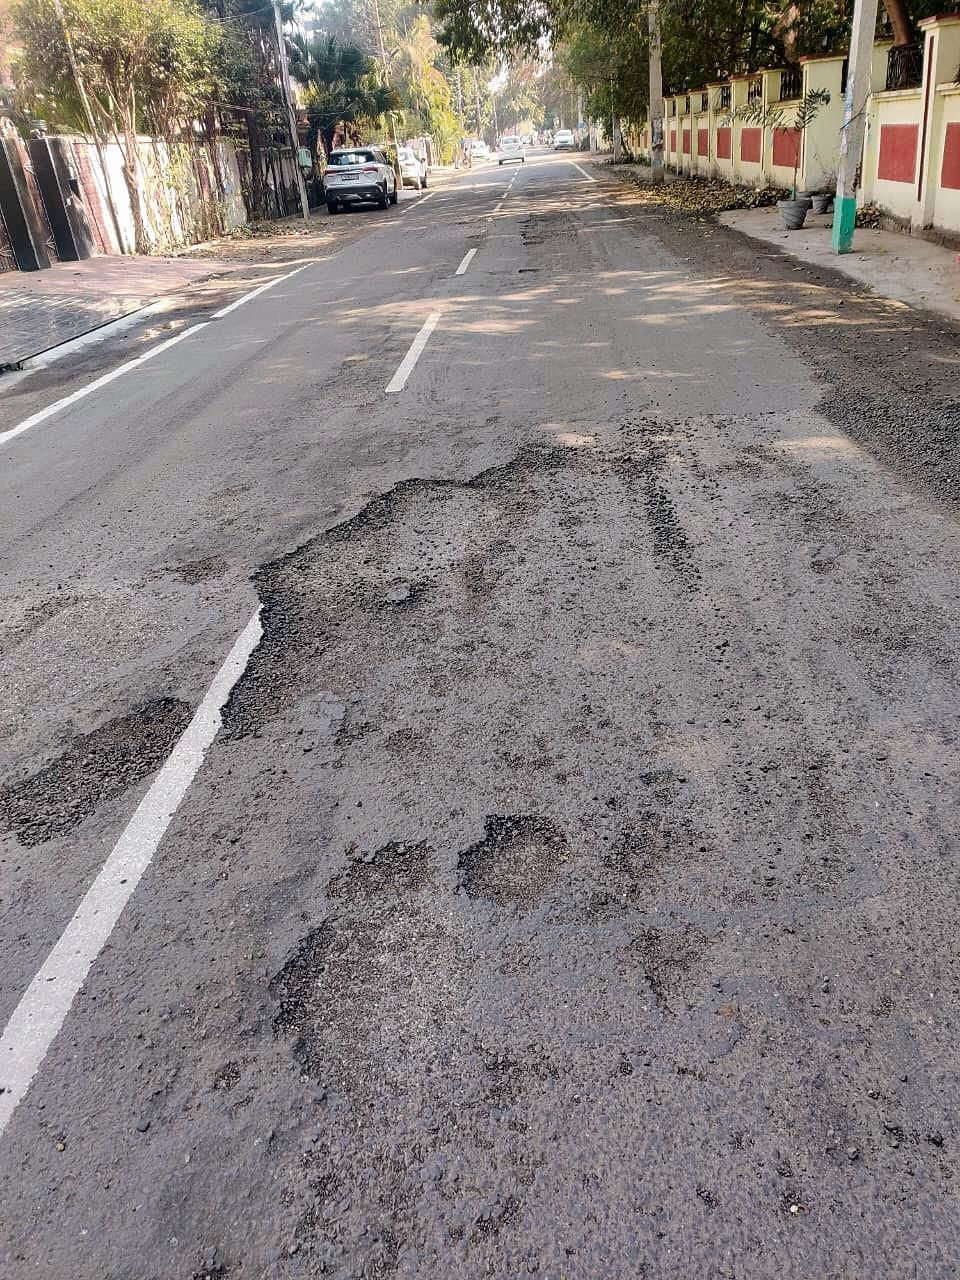 Jalandhar: Model Town Roads damaged within 3 months of construction